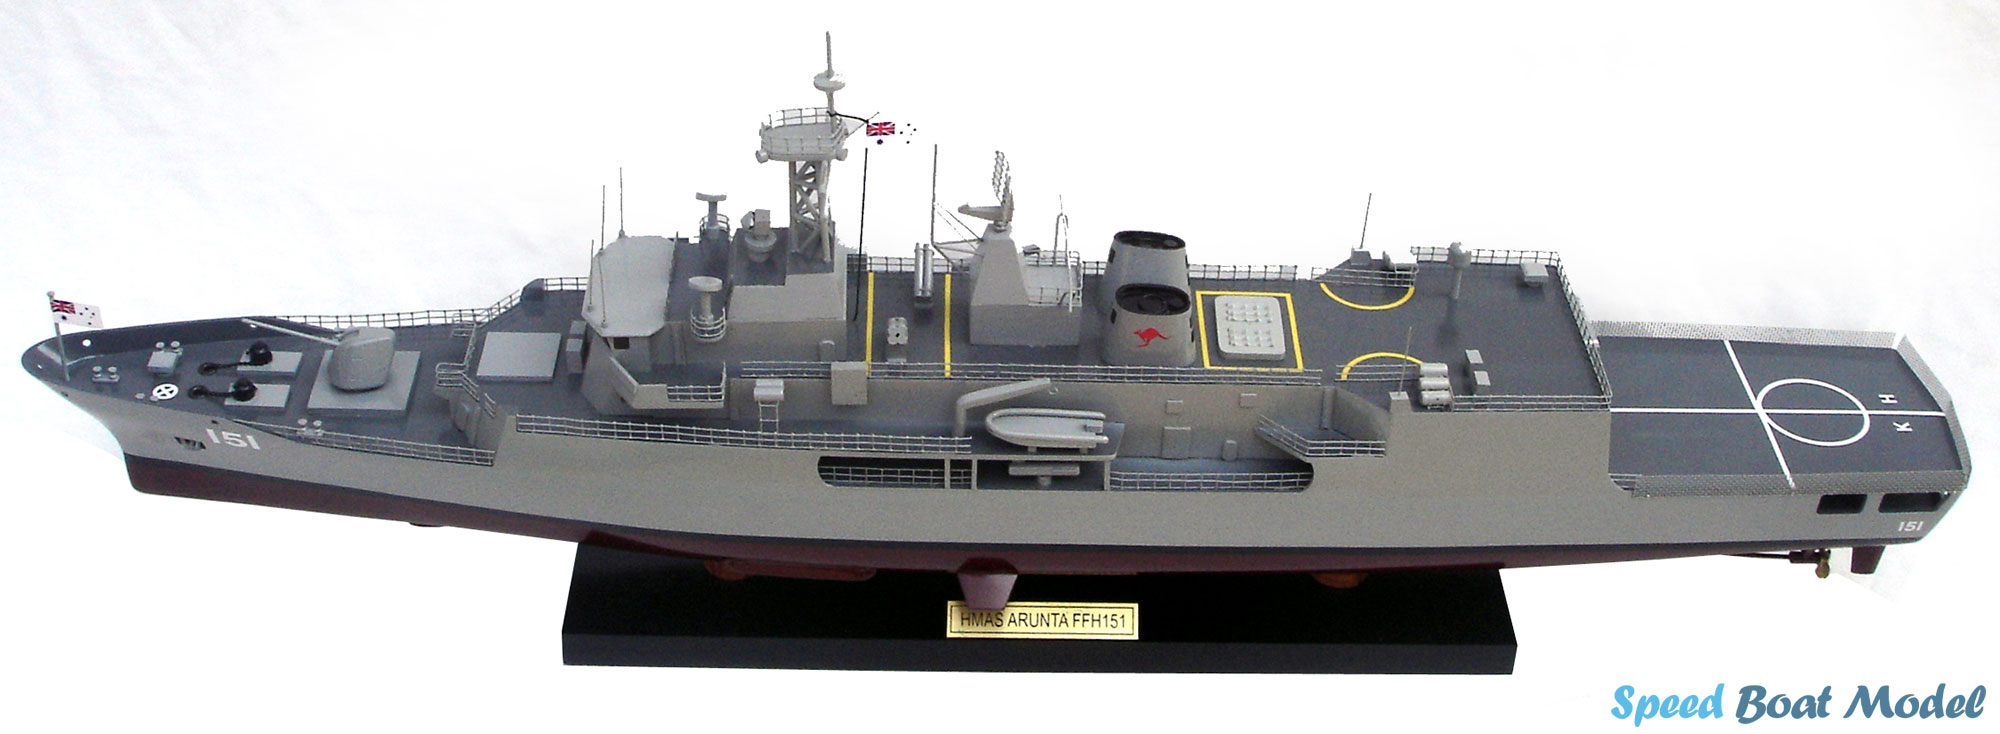 Hmas Arunta Ffh 151 Warship Model 31.5"